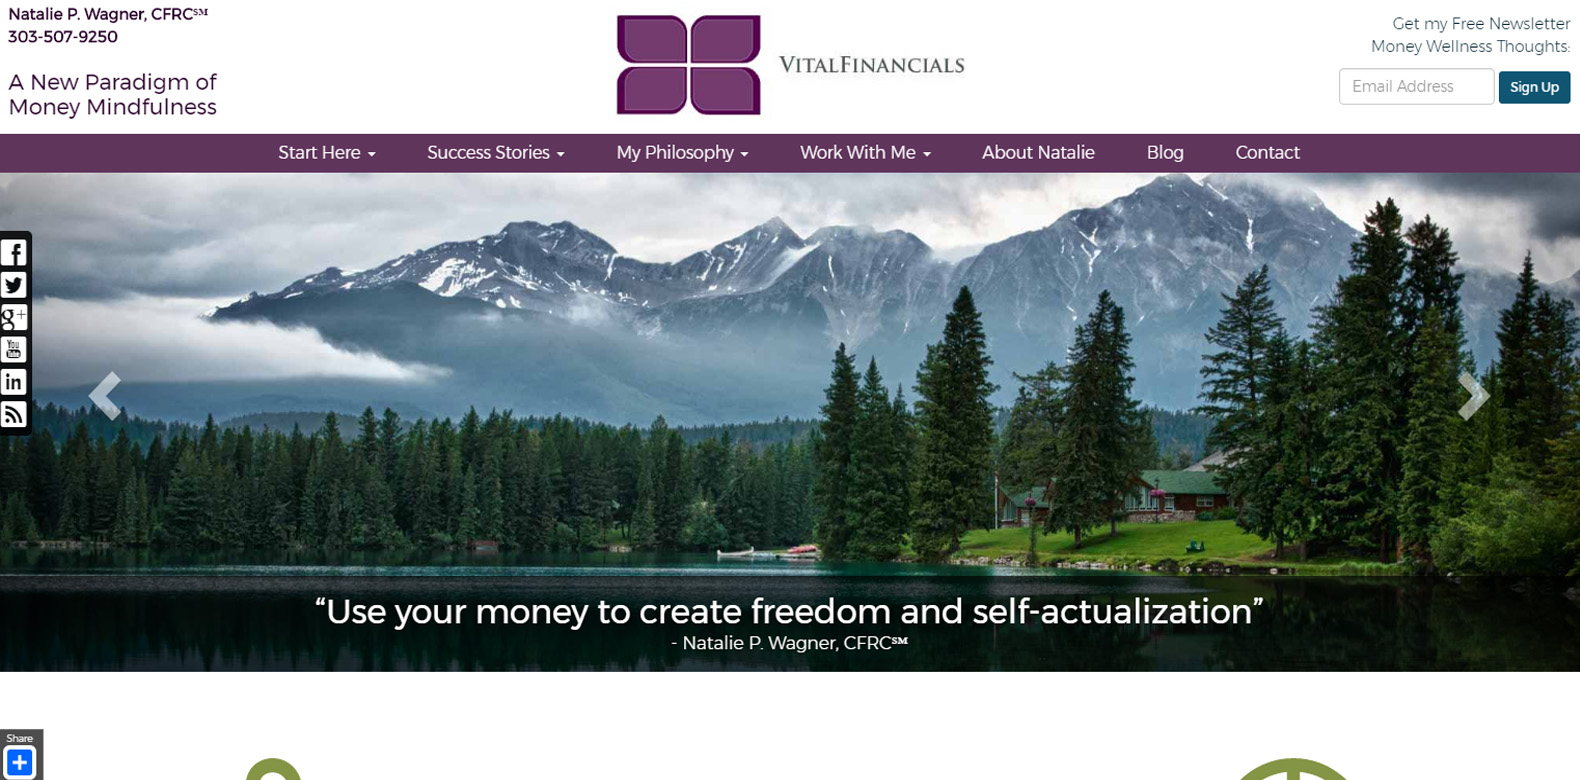 
New Website Launch: Vital Financials